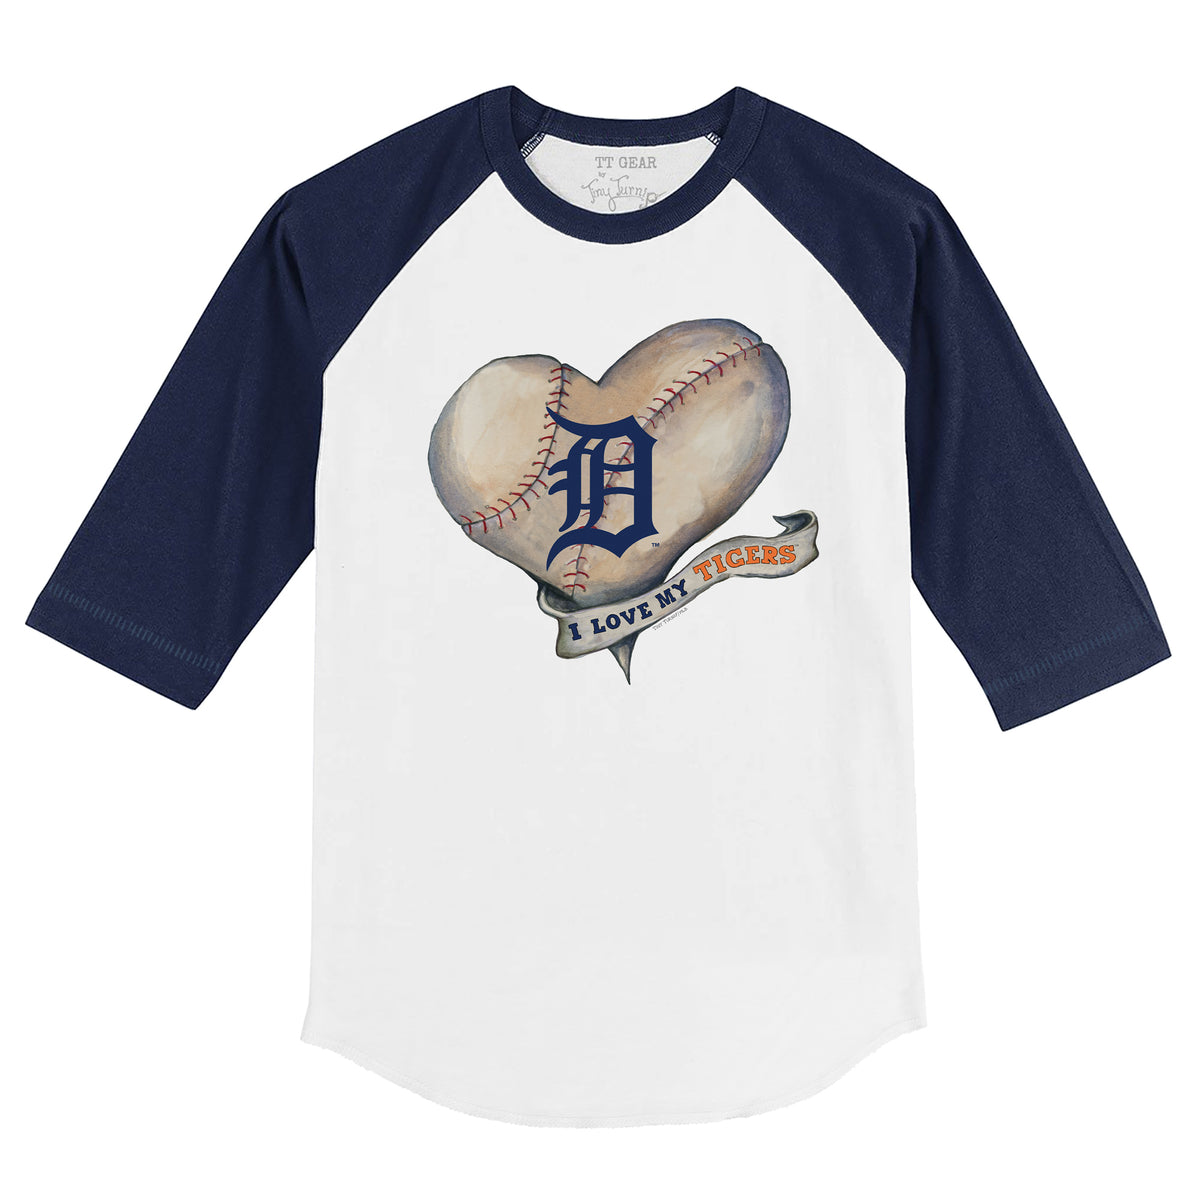 Lids Detroit Tigers Tiny Turnip Toddler Blooming Baseballs T-Shirt